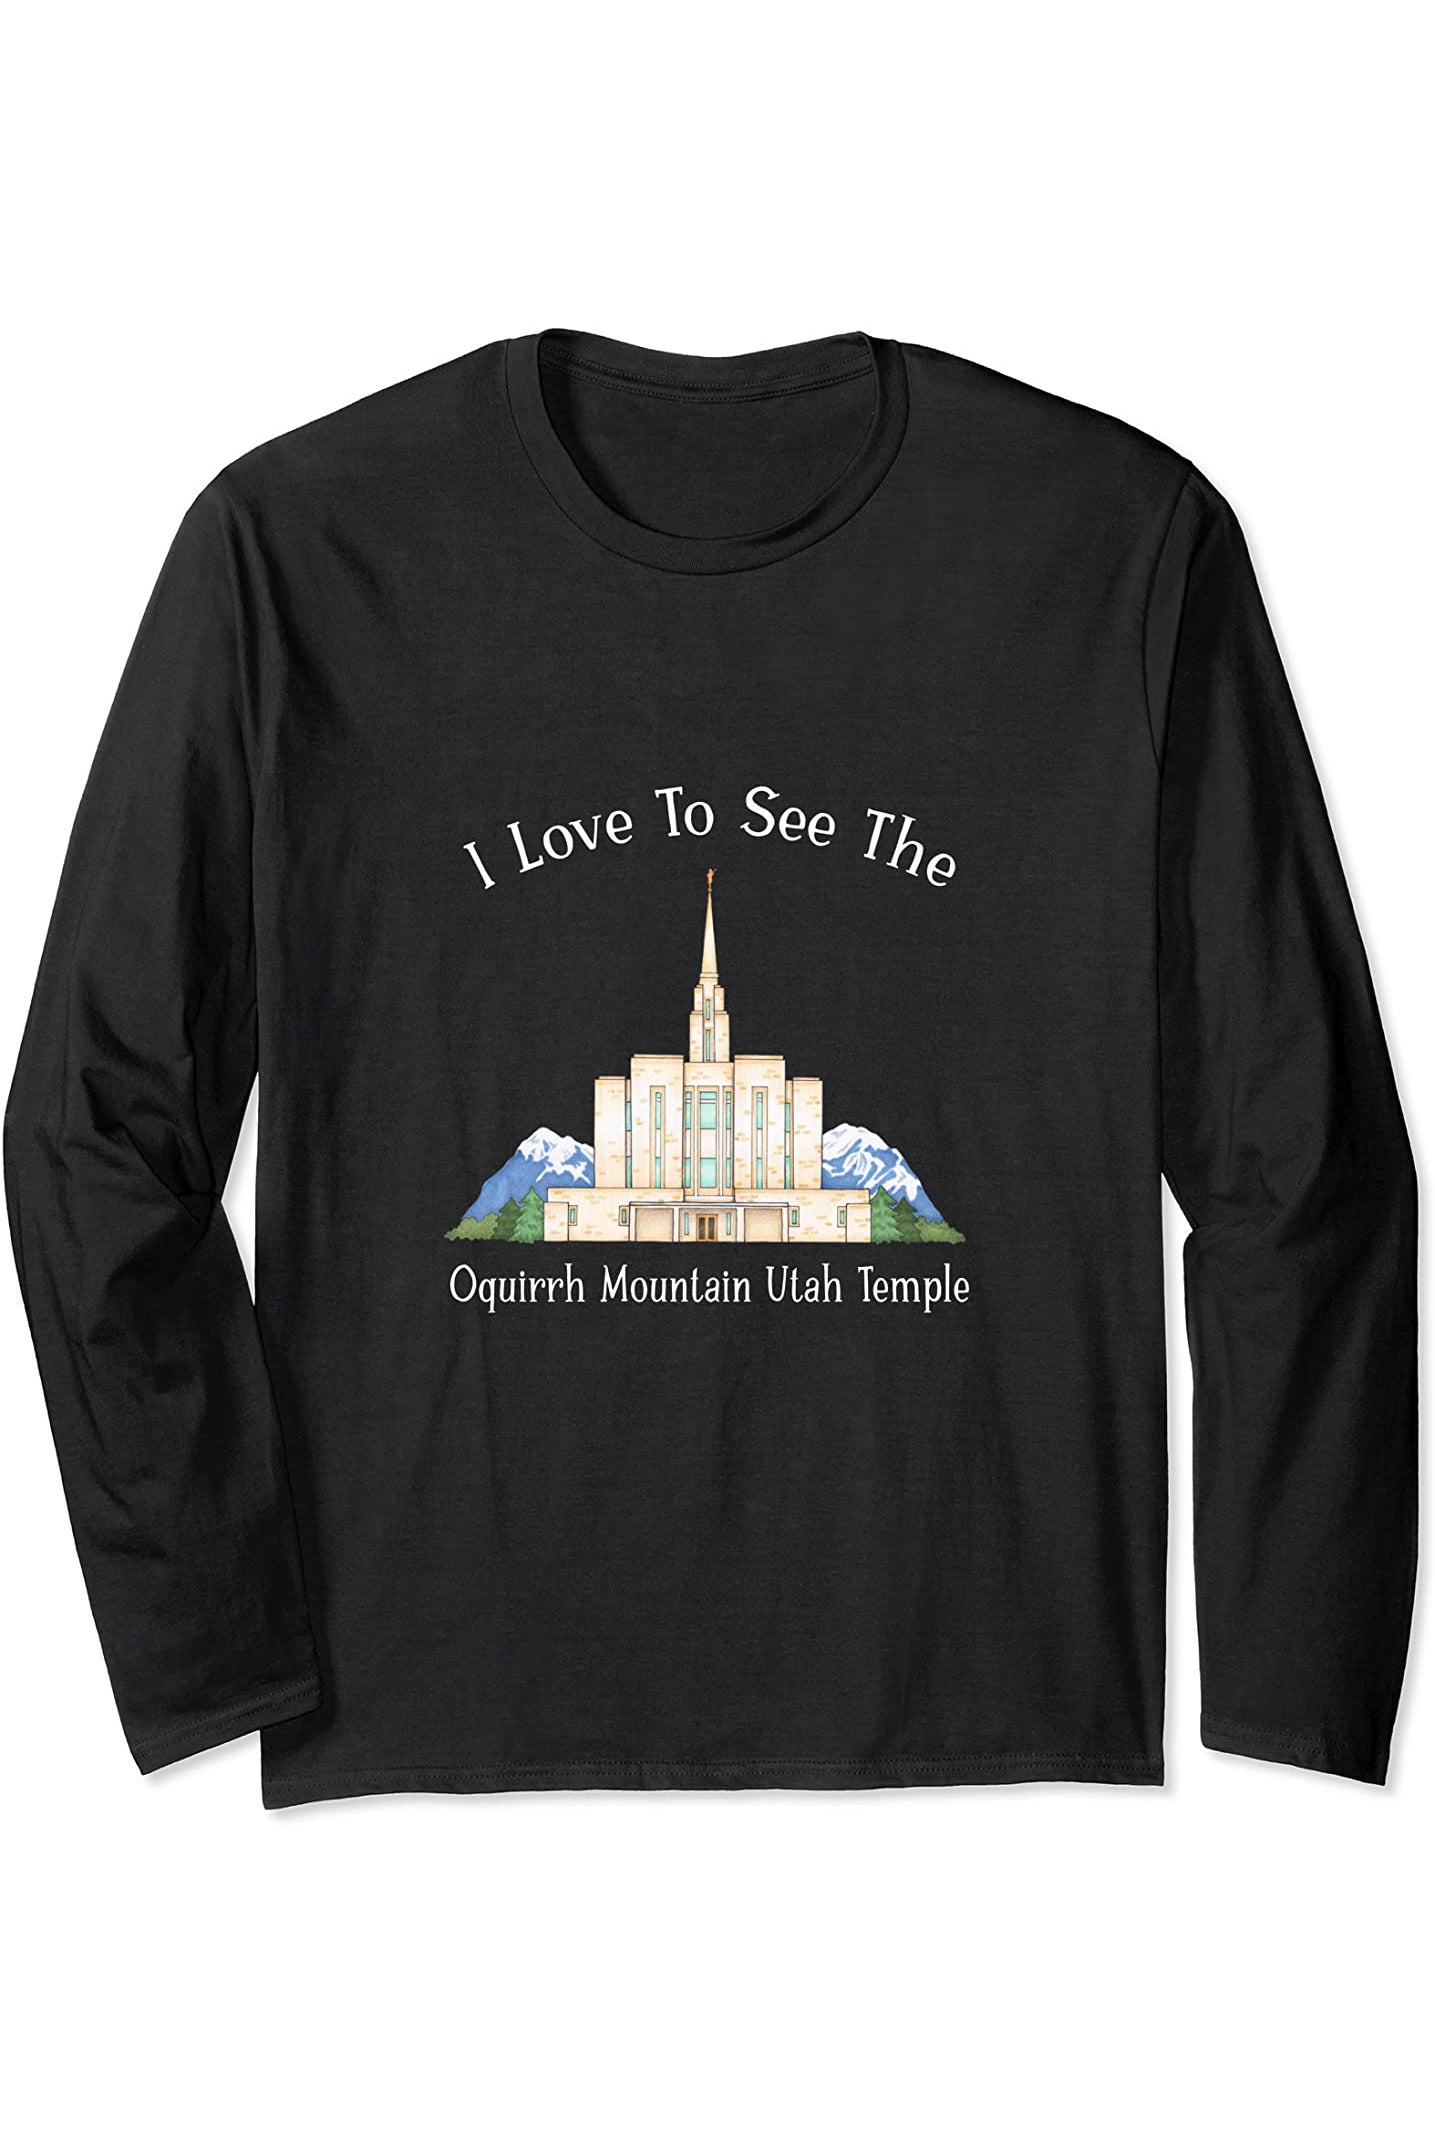 Oquirrh Mountain Utah Temple Long Sleeve T-Shirt - Happy Style (English) US